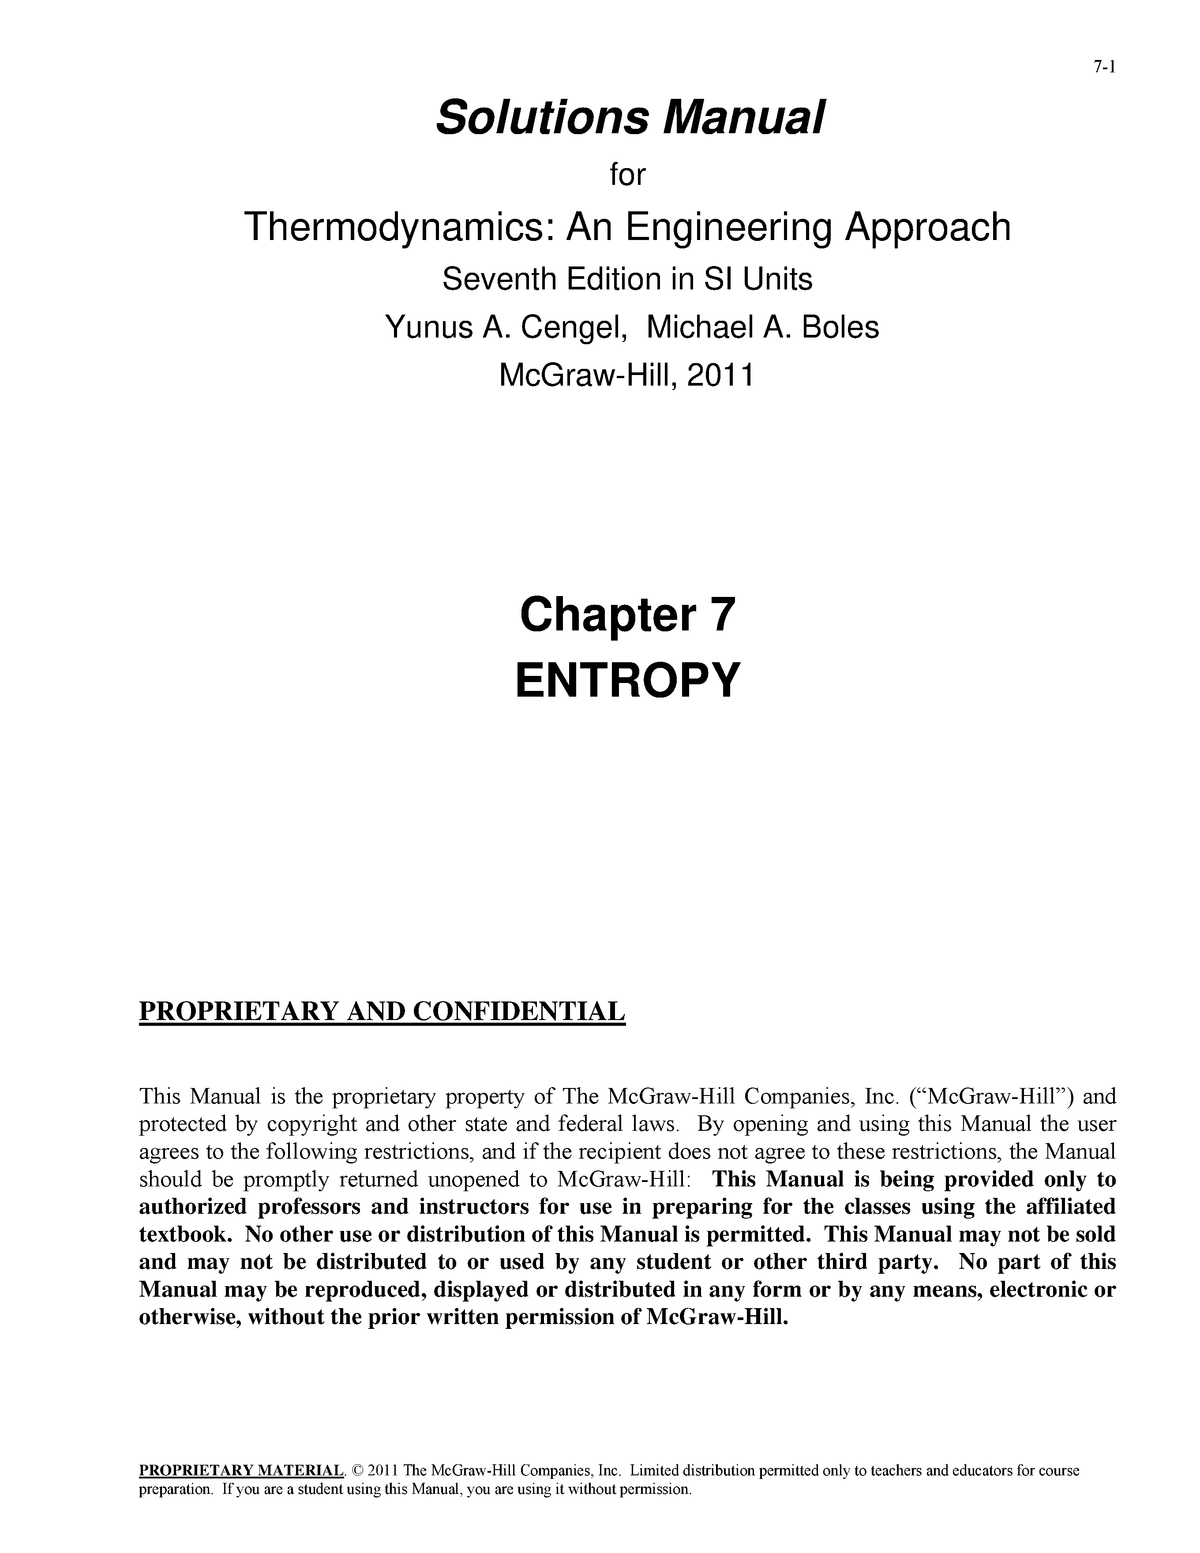 Thermodynamics zemansky solution manual pdf